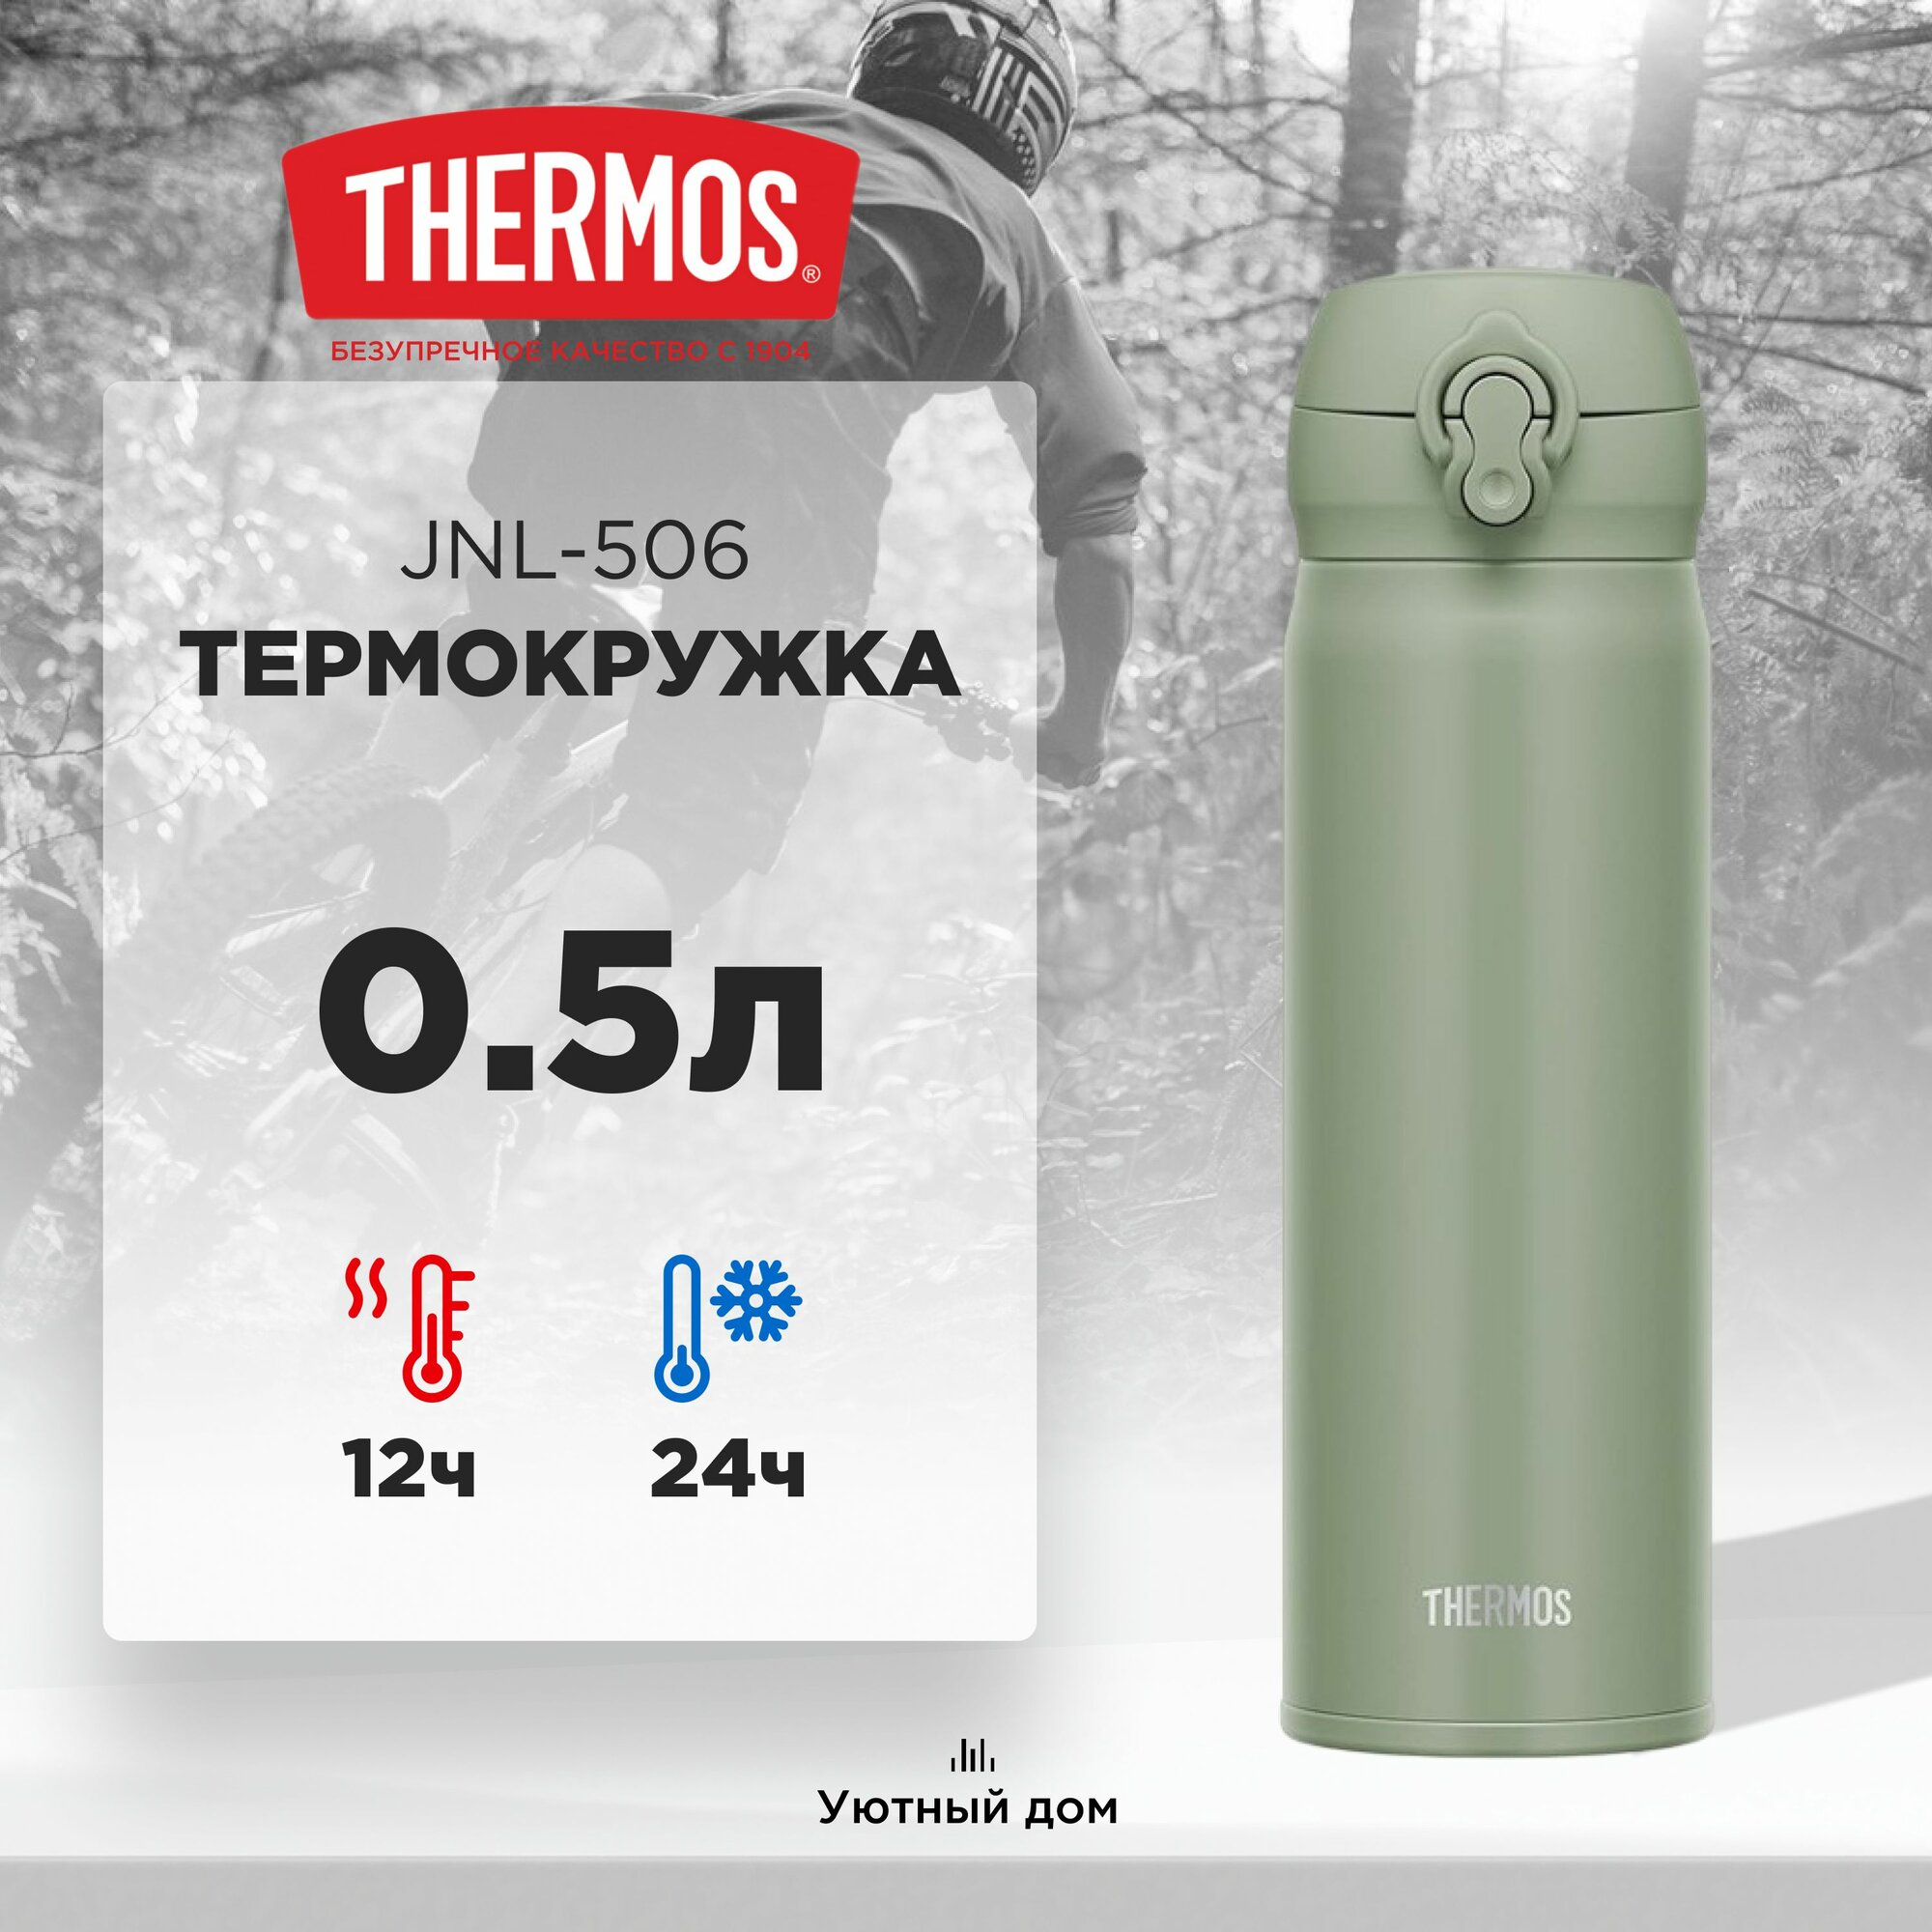 Термокружка THERMOS JNL-506 SMKKI 0.5L